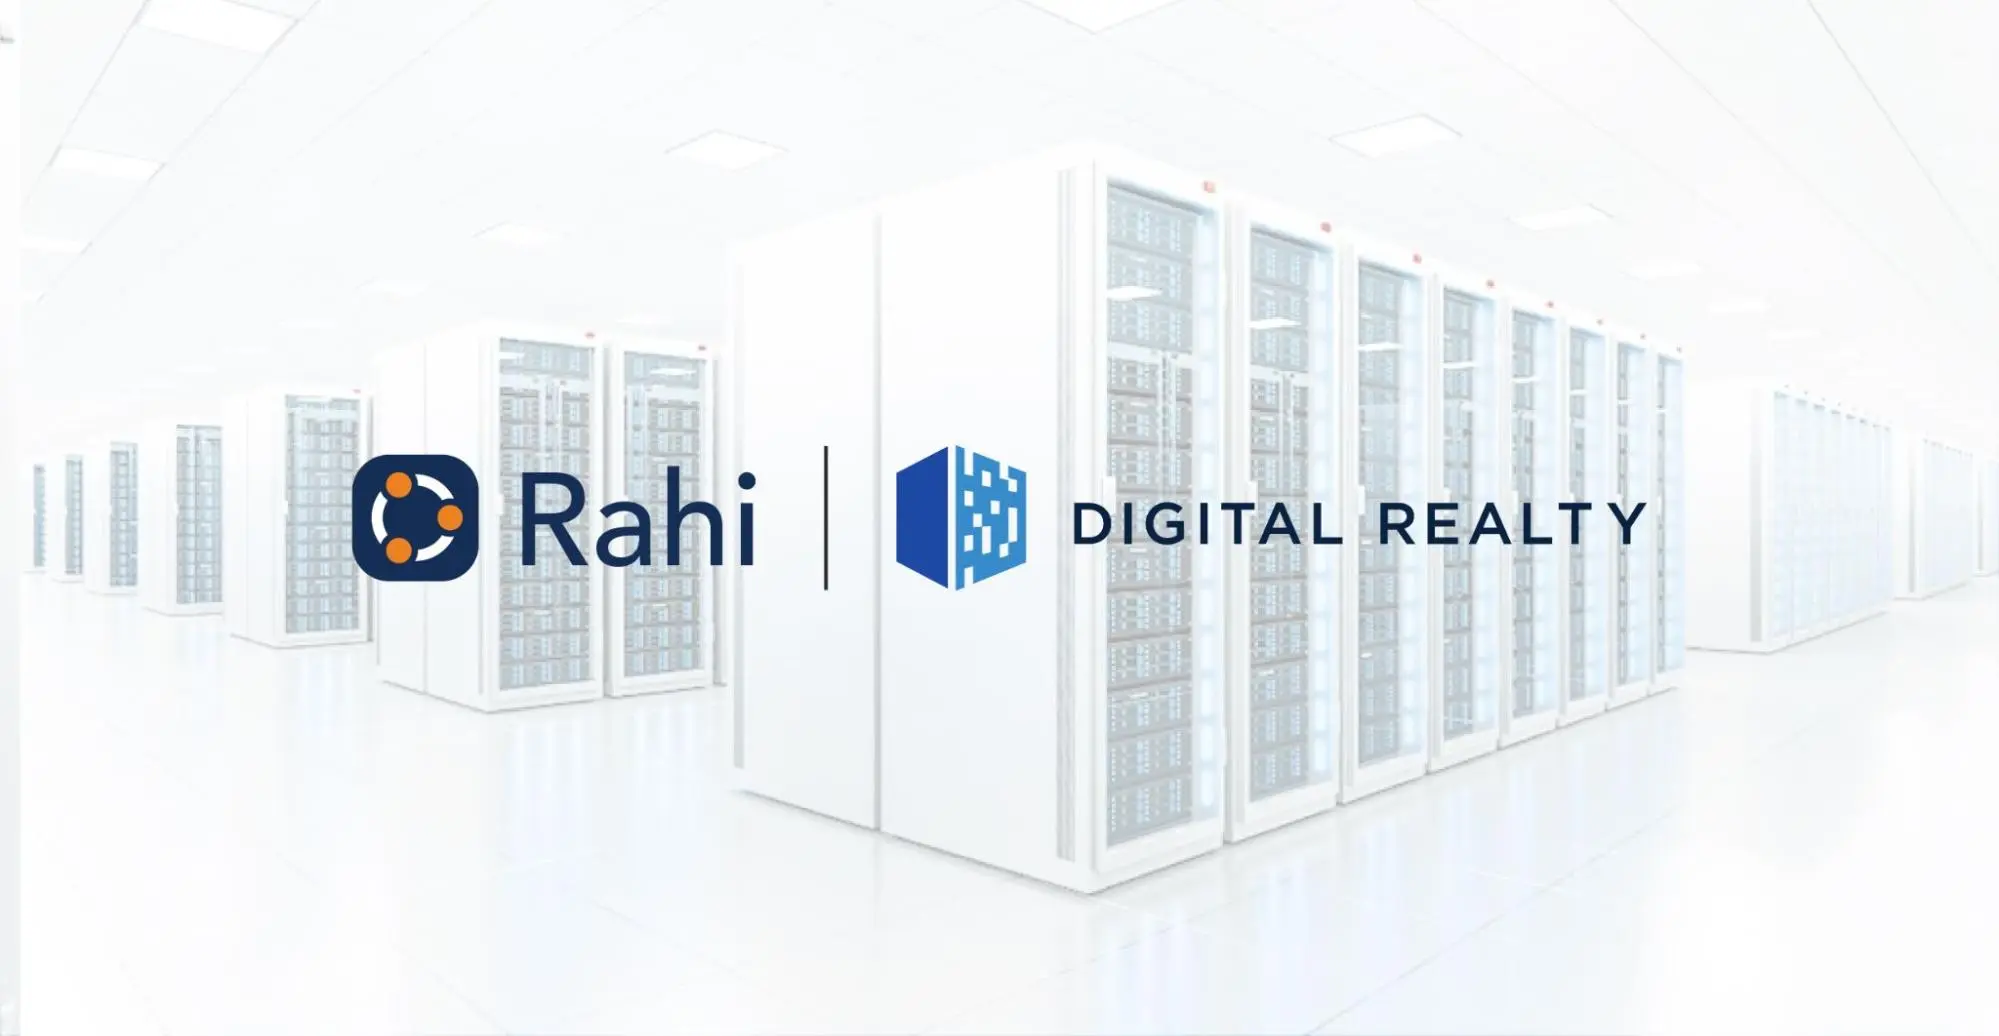 rahi y la realidad digital